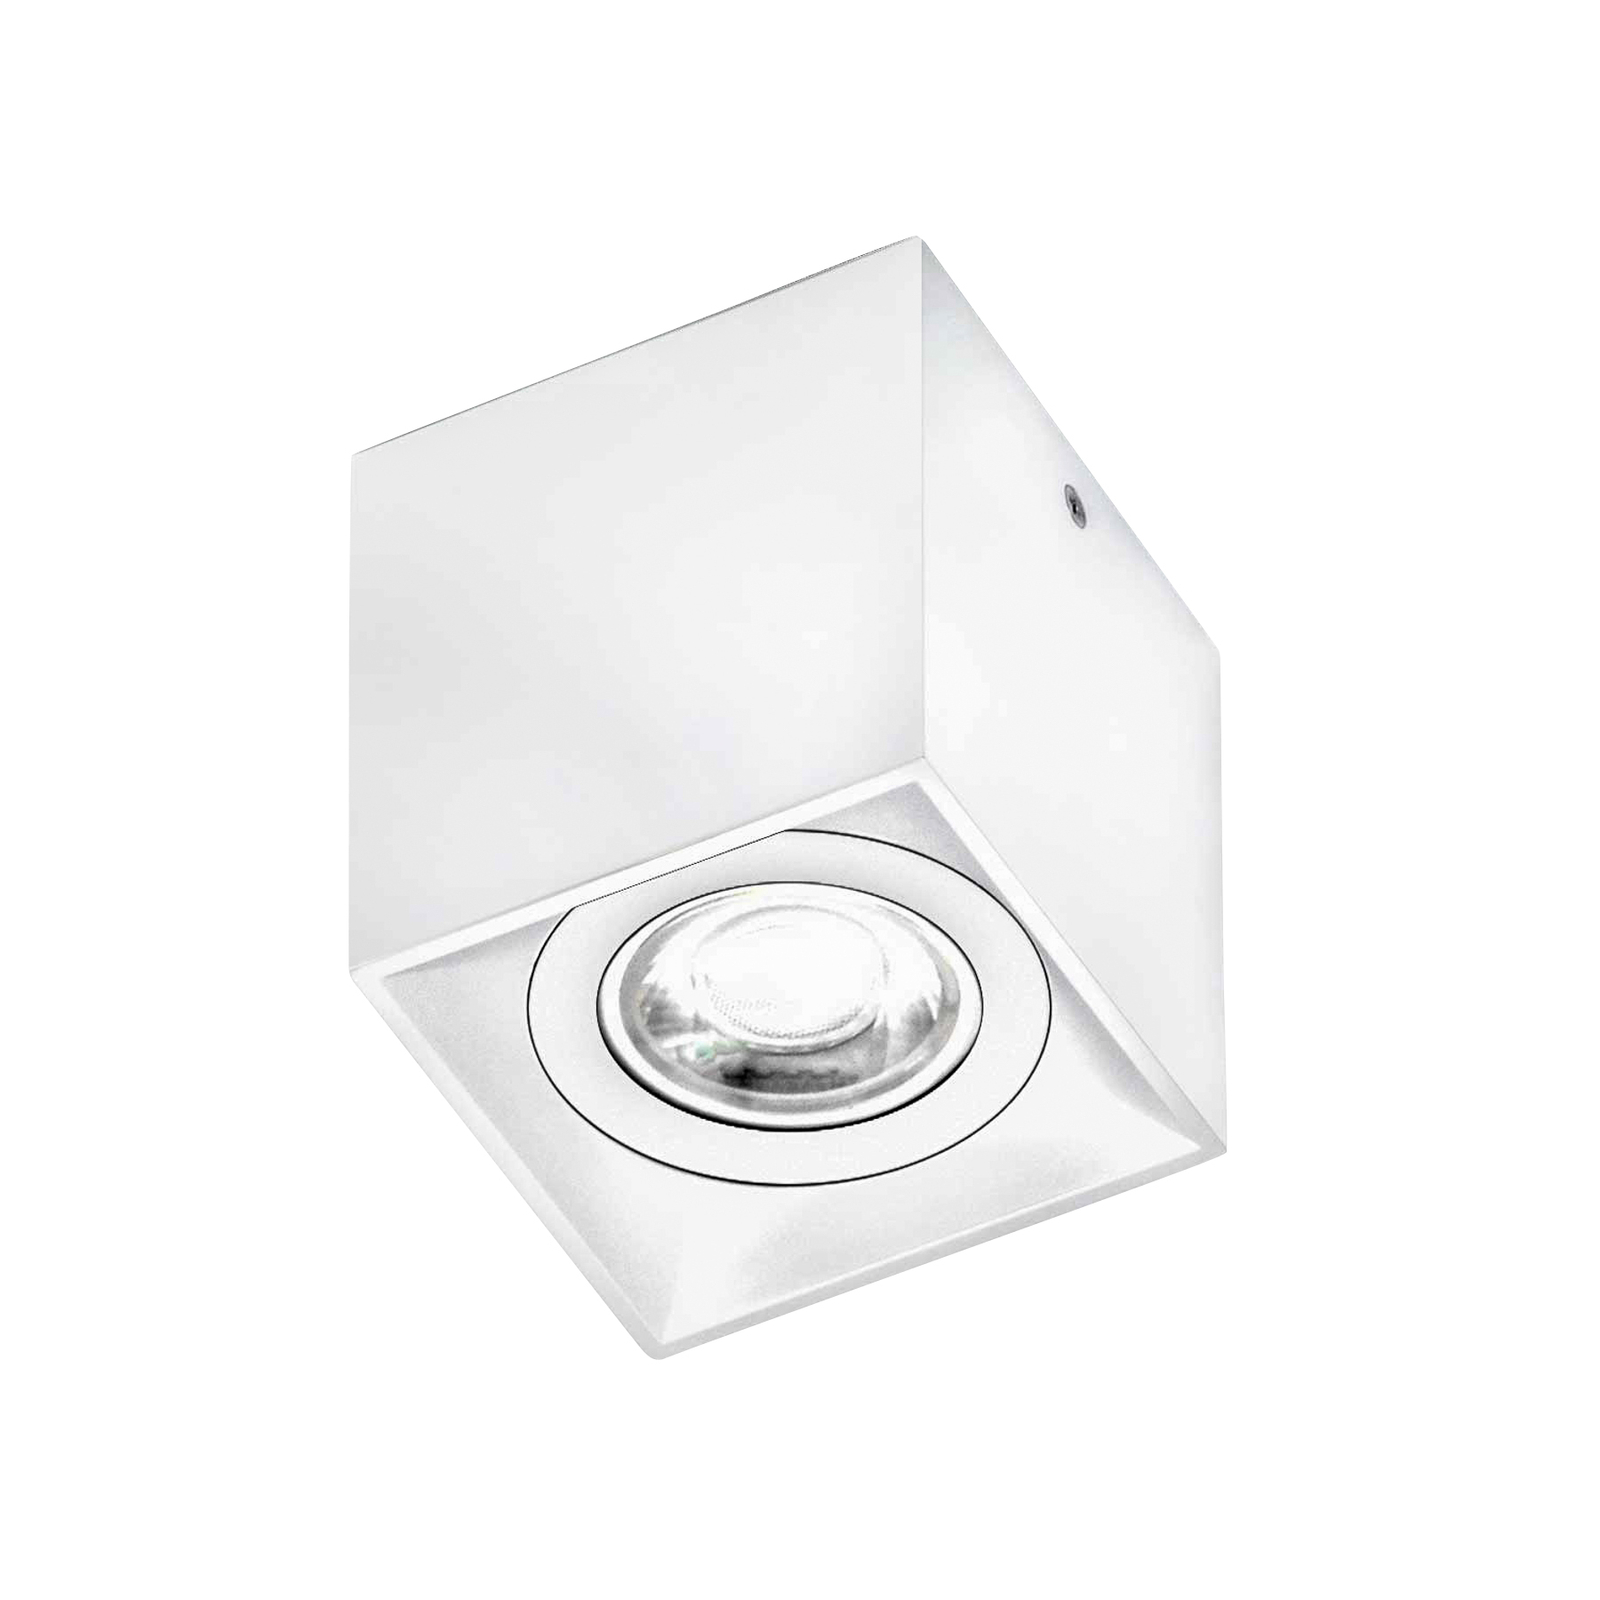 White Dau Spot cube ceiling light